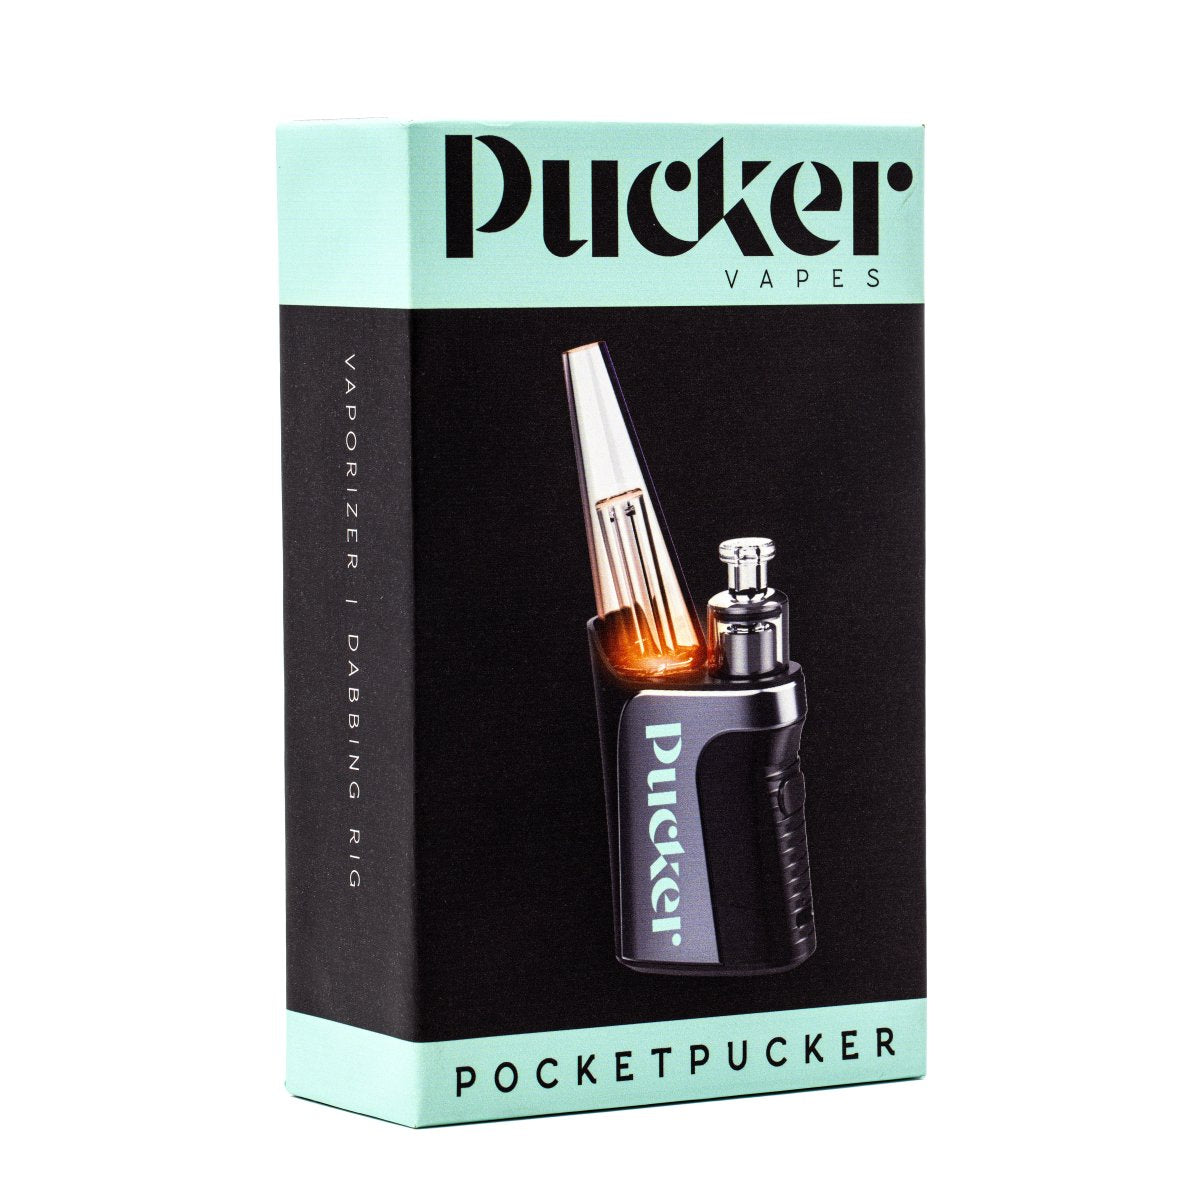 Pocket Pucker Vape Front